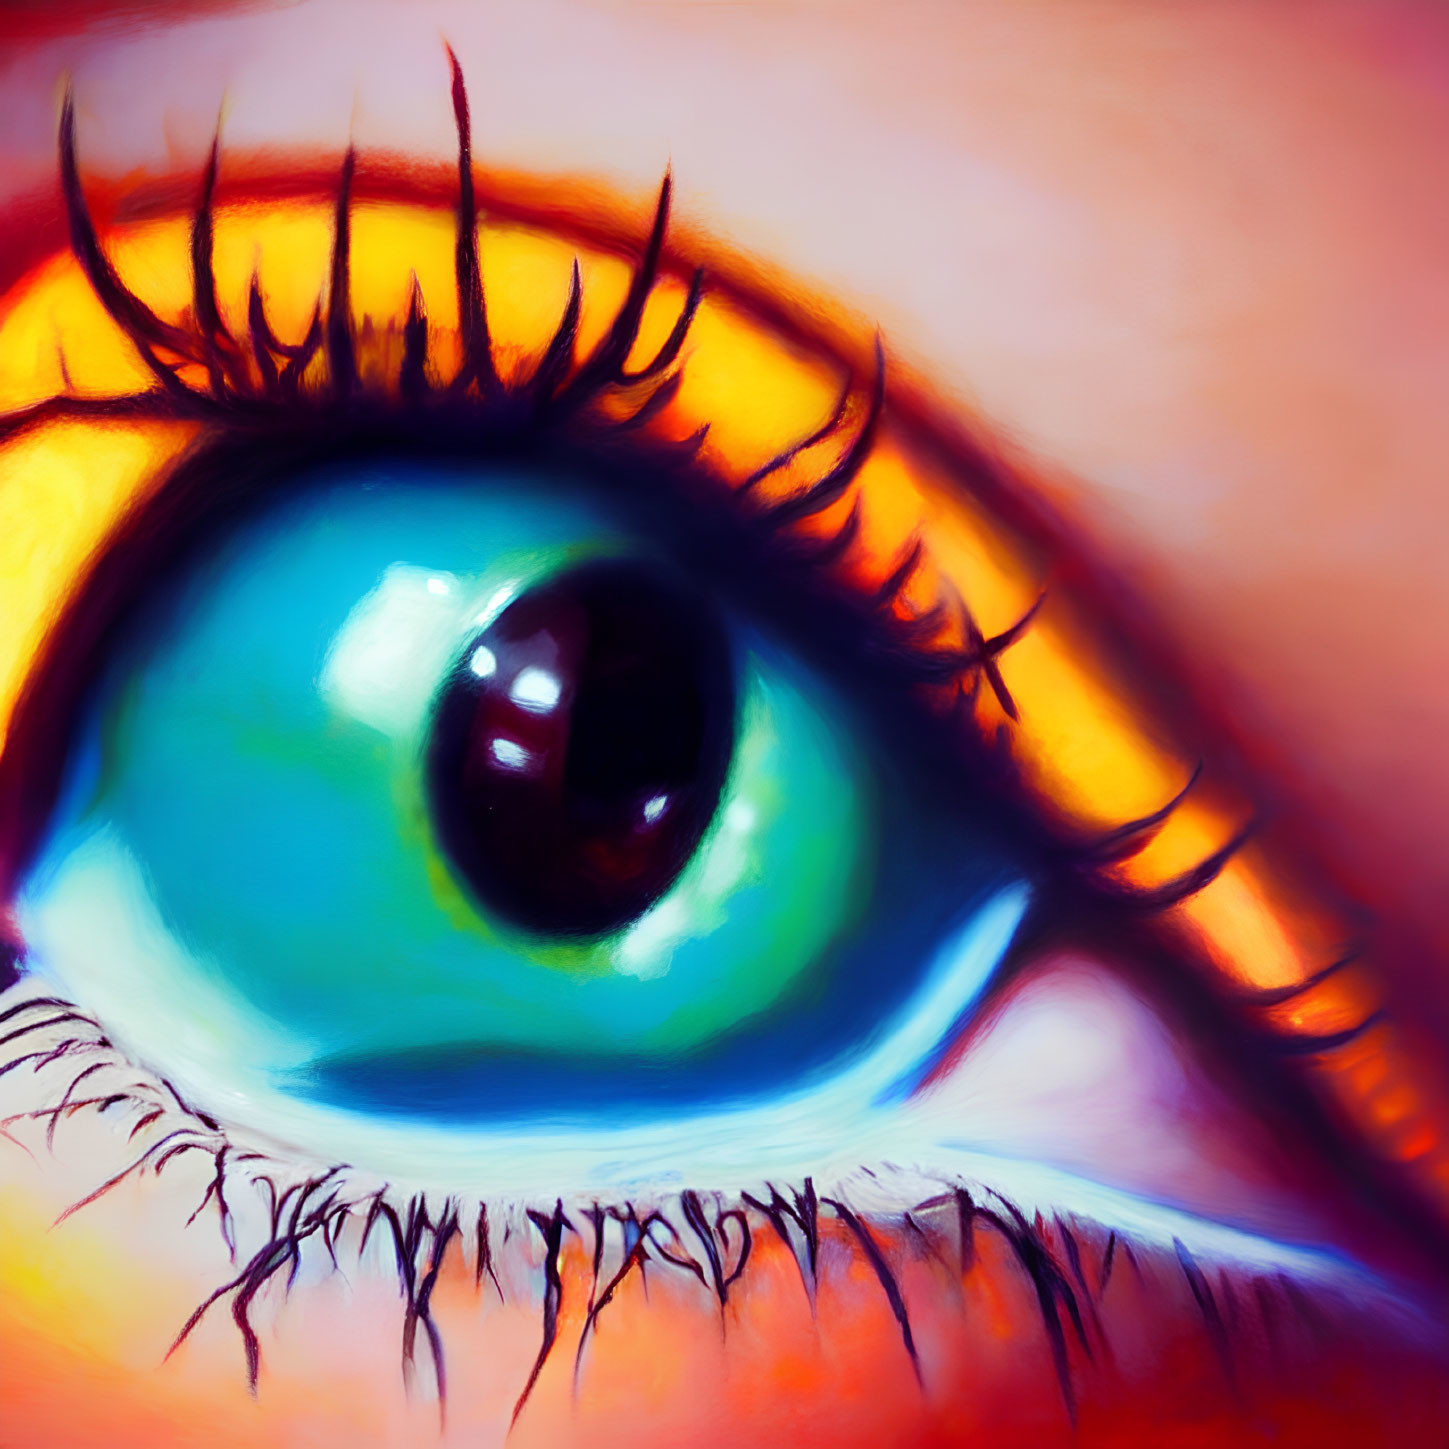 Colorful Close-Up Illustration of Human Eye with Exaggerated Eyelashes and Vibrant Iris